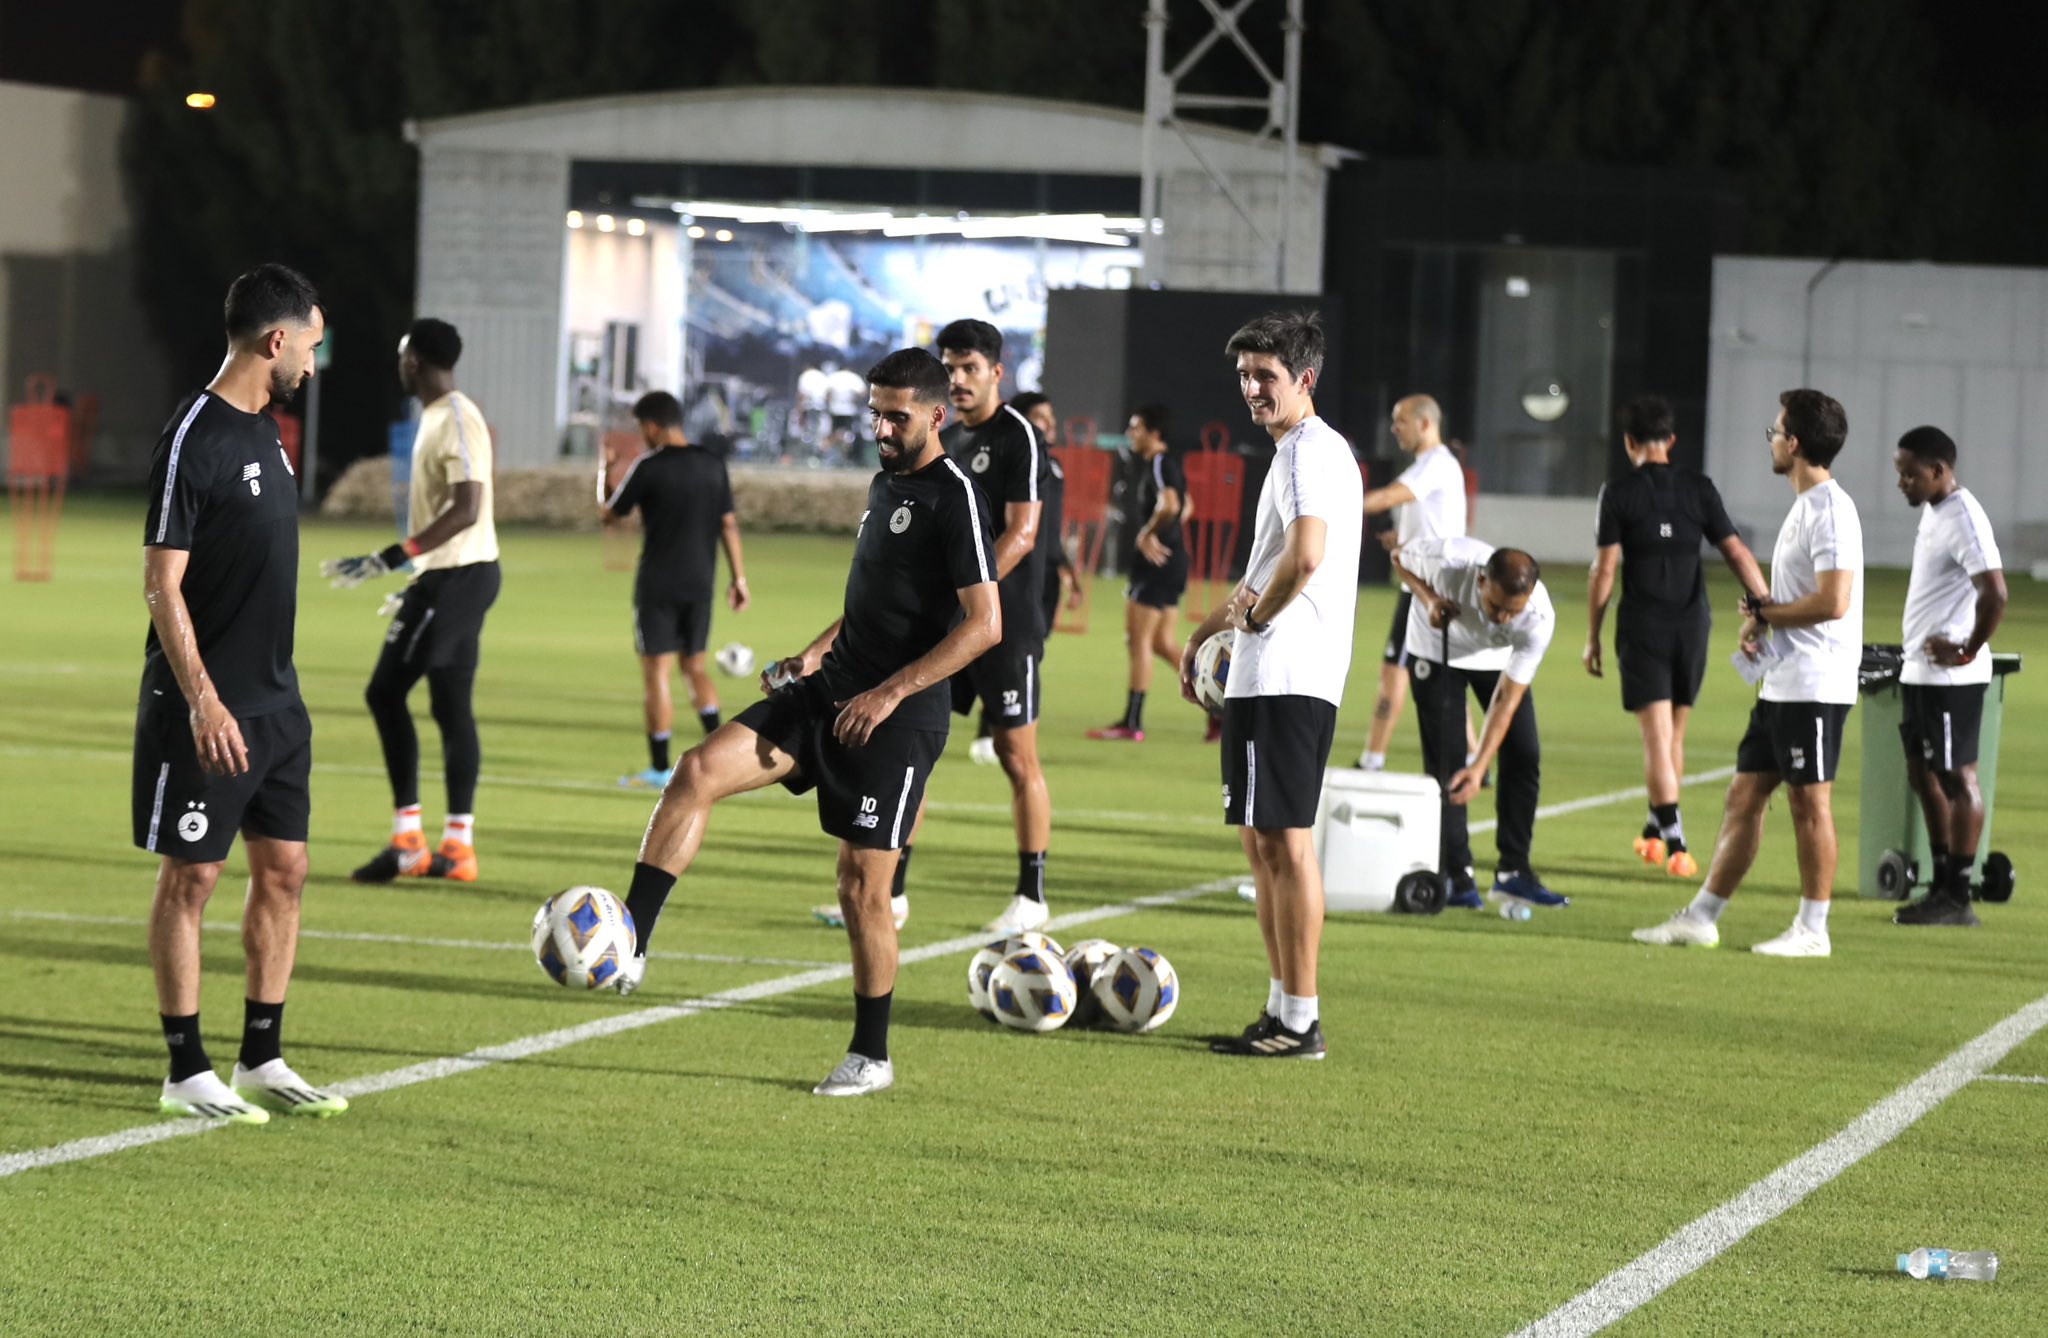 Holders Al Hilal Trounce Al Duhail To Reach AFC Champions League